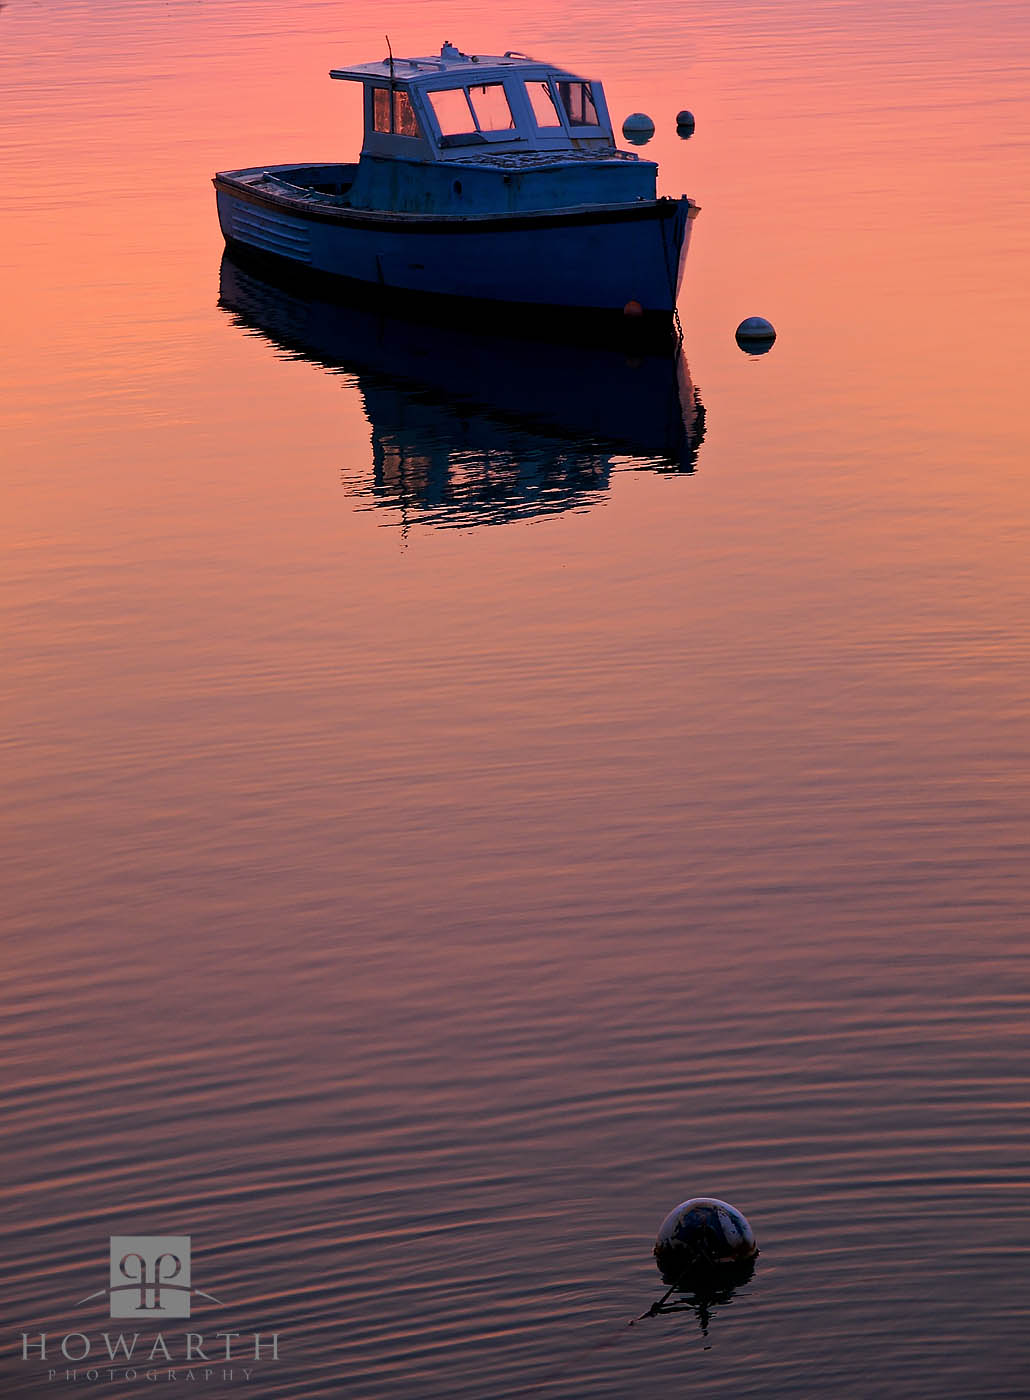 An older Bermudian boat moored up at sunset